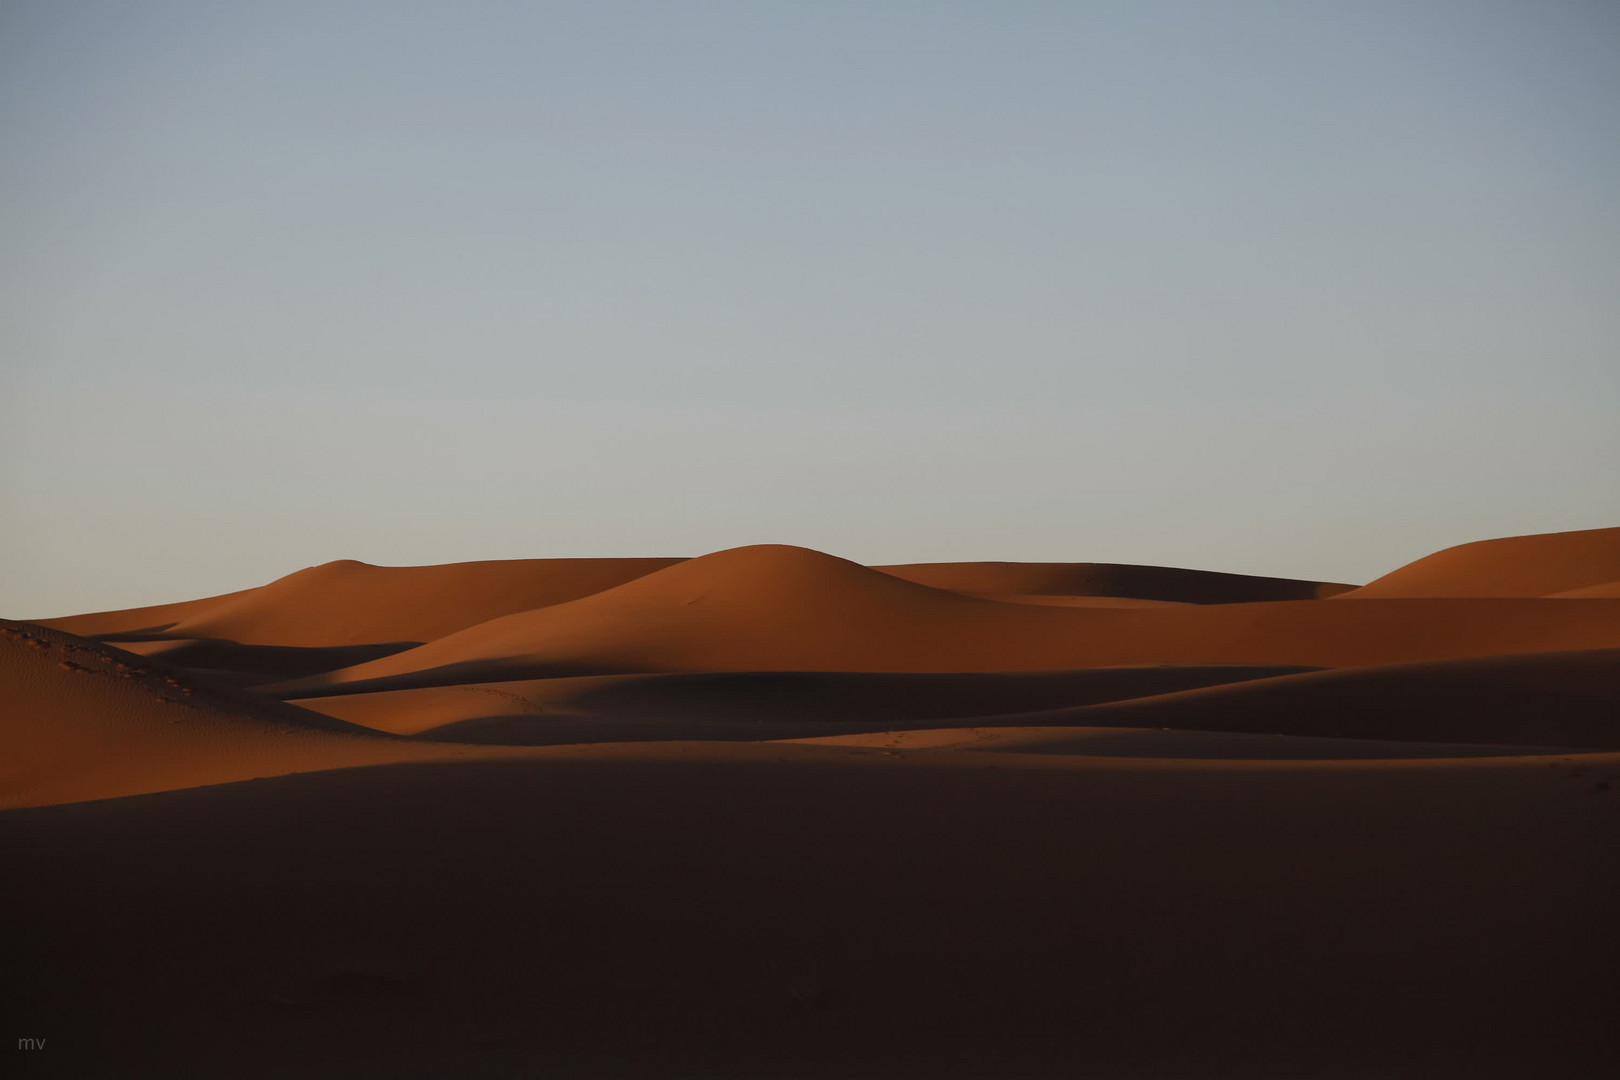 Tief in der Sahara